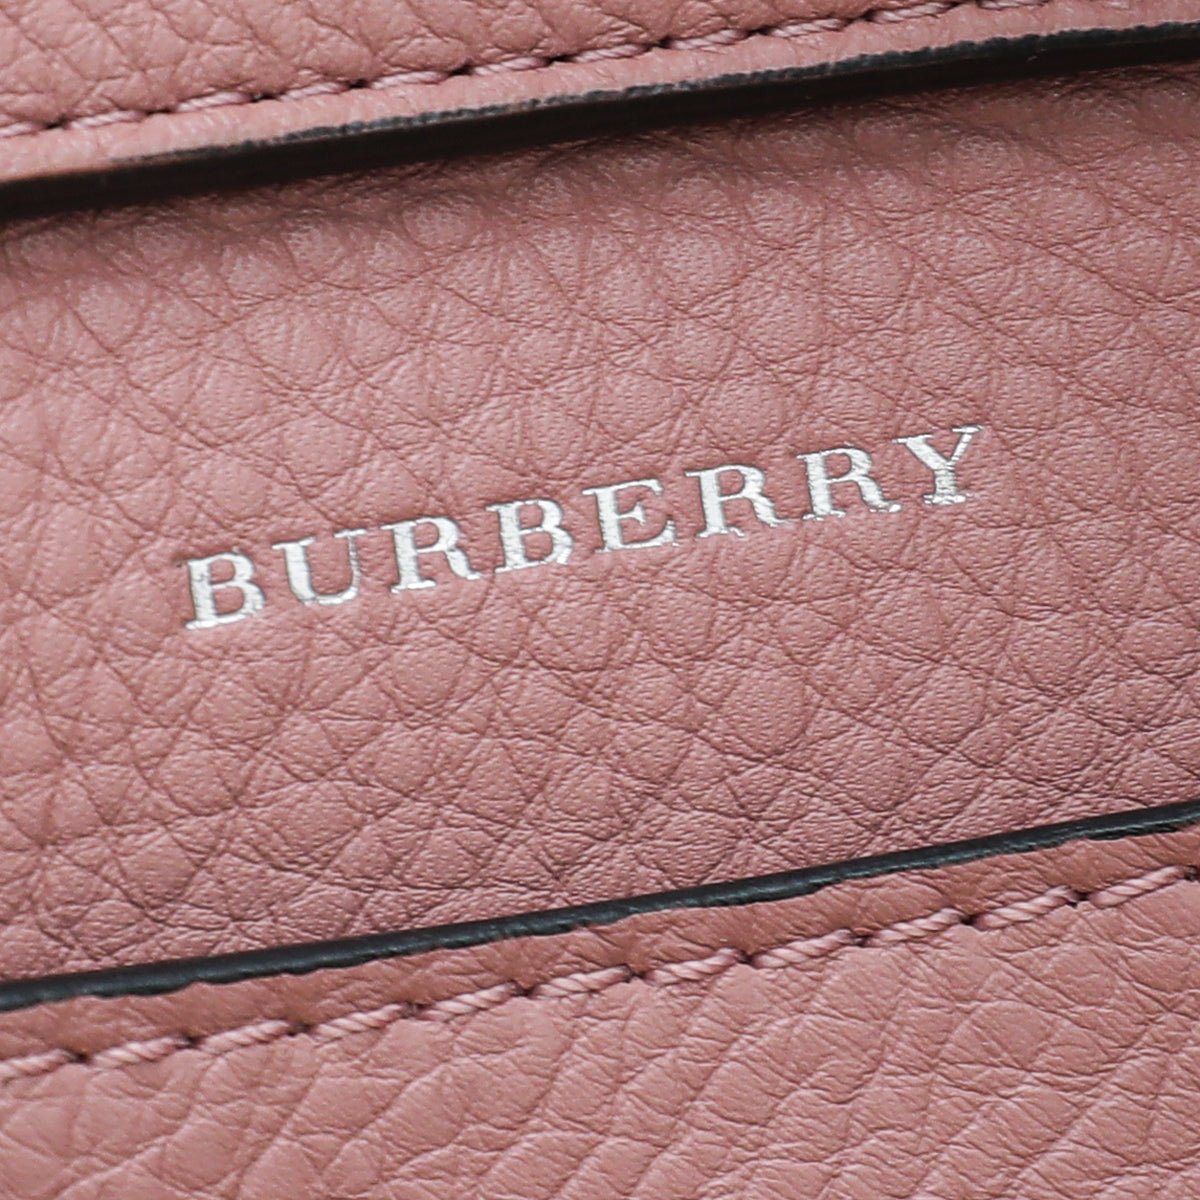 Burberry - Burberry Bicolor Large Clutch | The Closet